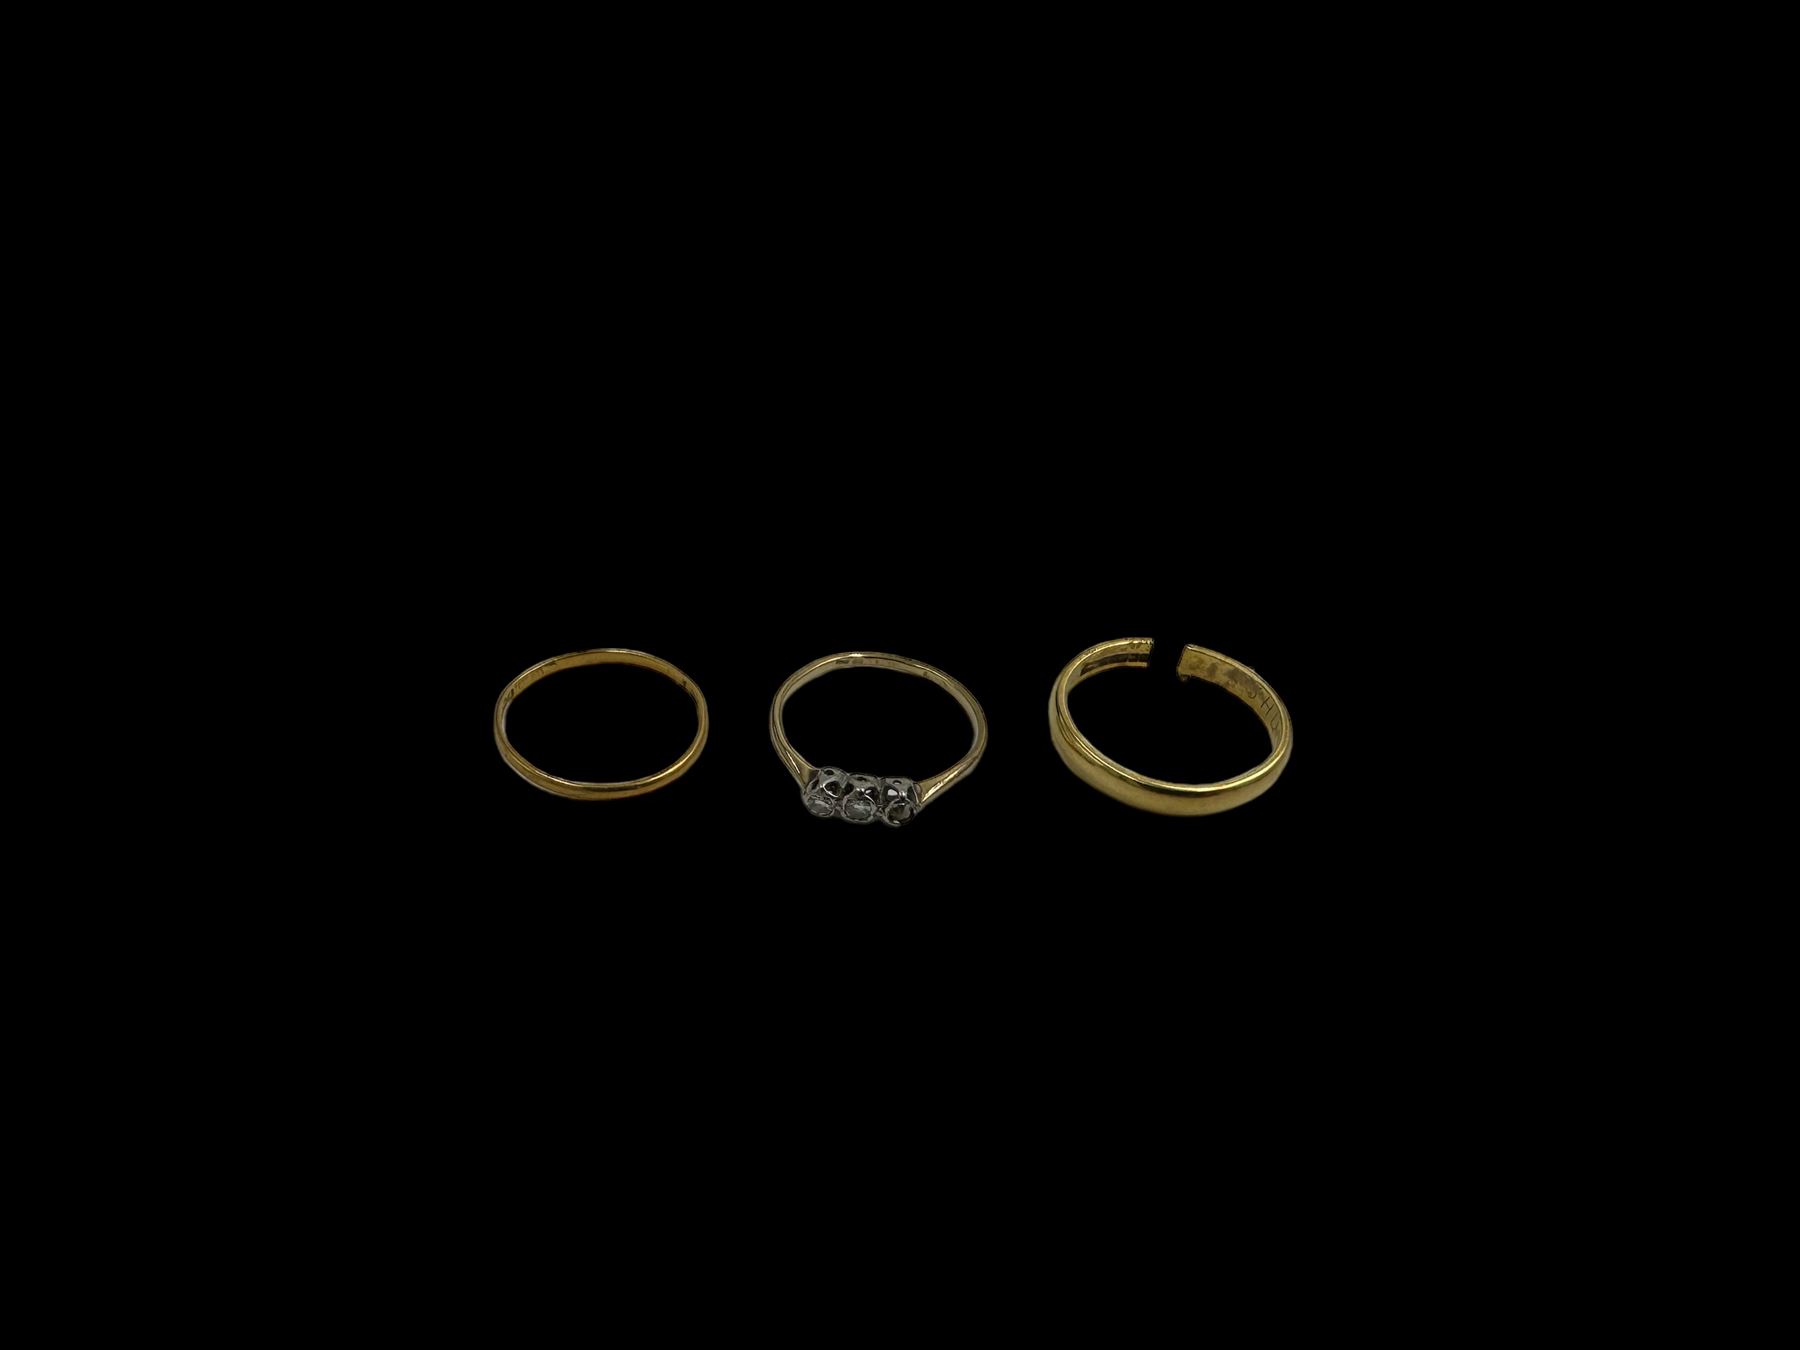 18ct gold wedding band - Image 2 of 3